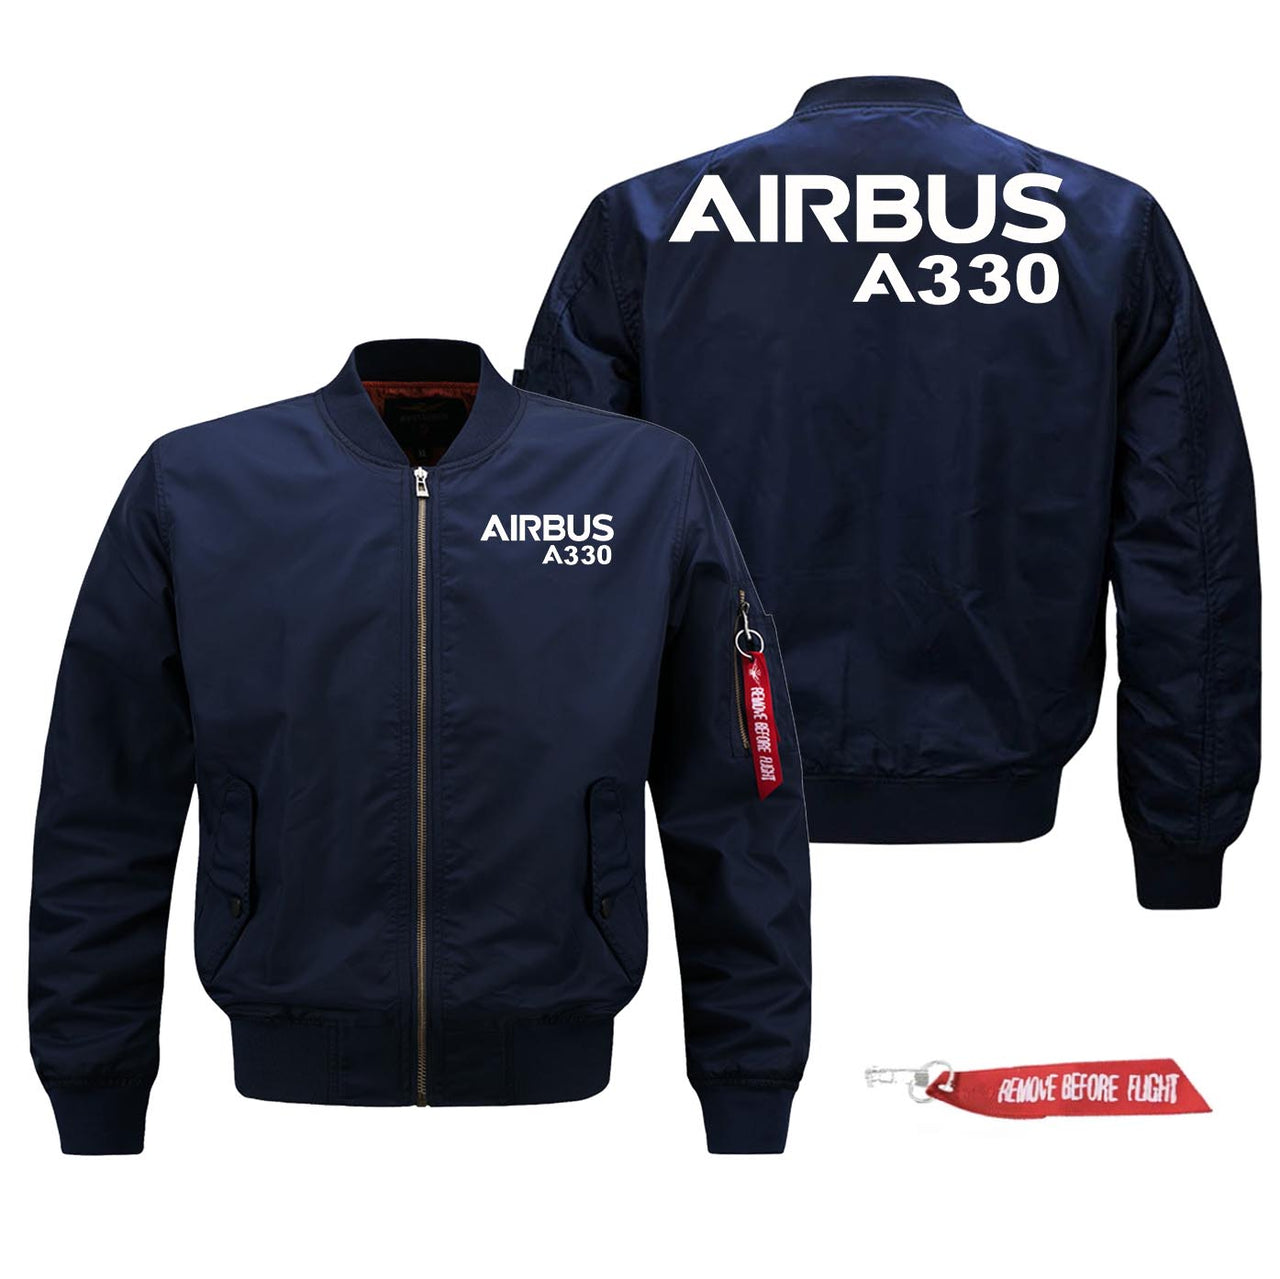 Airbus A330 Text Designed Pilot Jackets (Customizable)